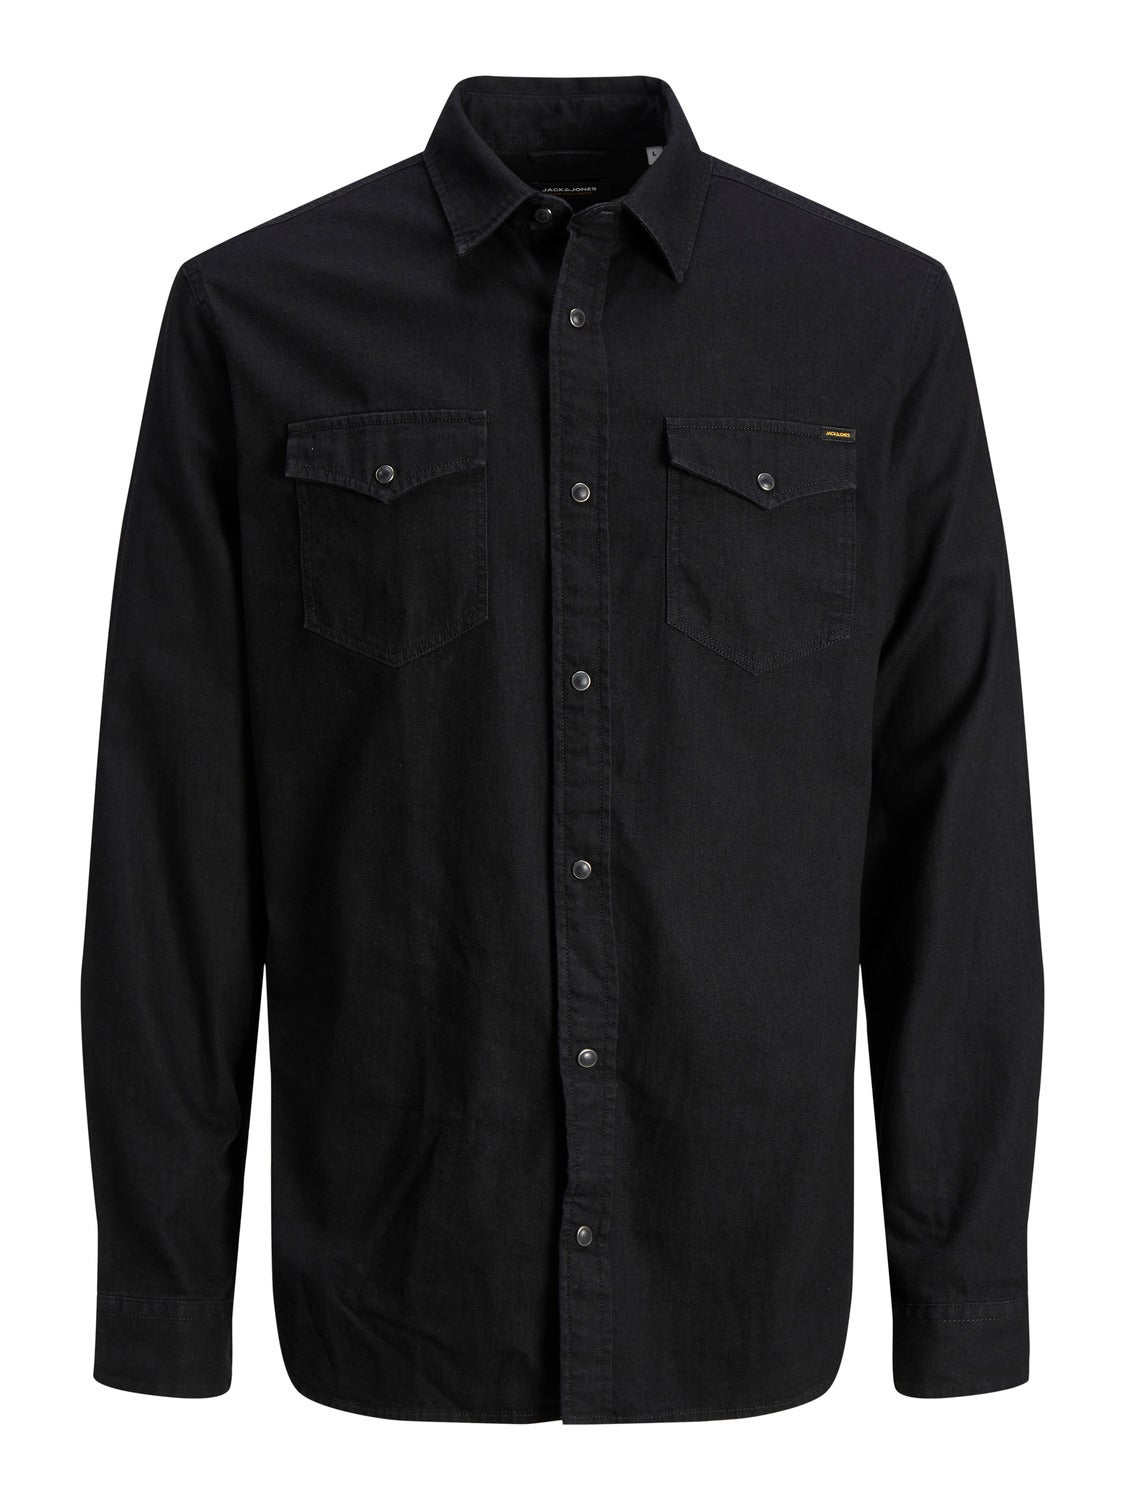 Kimes Ranch Grimes Denim Shirt - Men's Shirts in Black | Buckle